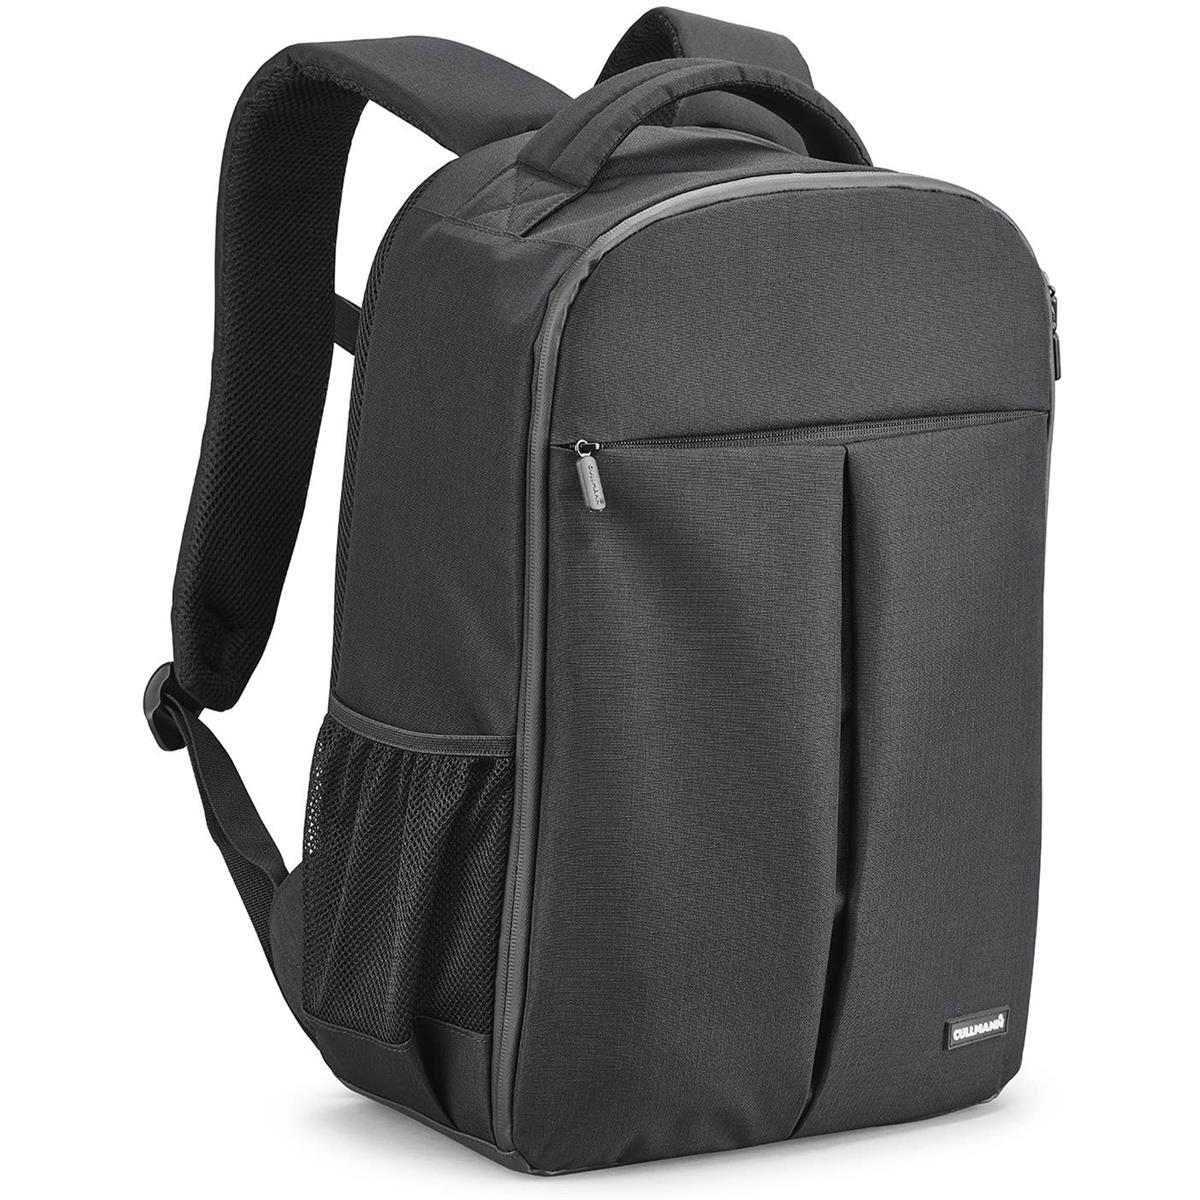 Image of Cullmann Malaga BackPack 550+ Camera Backpack